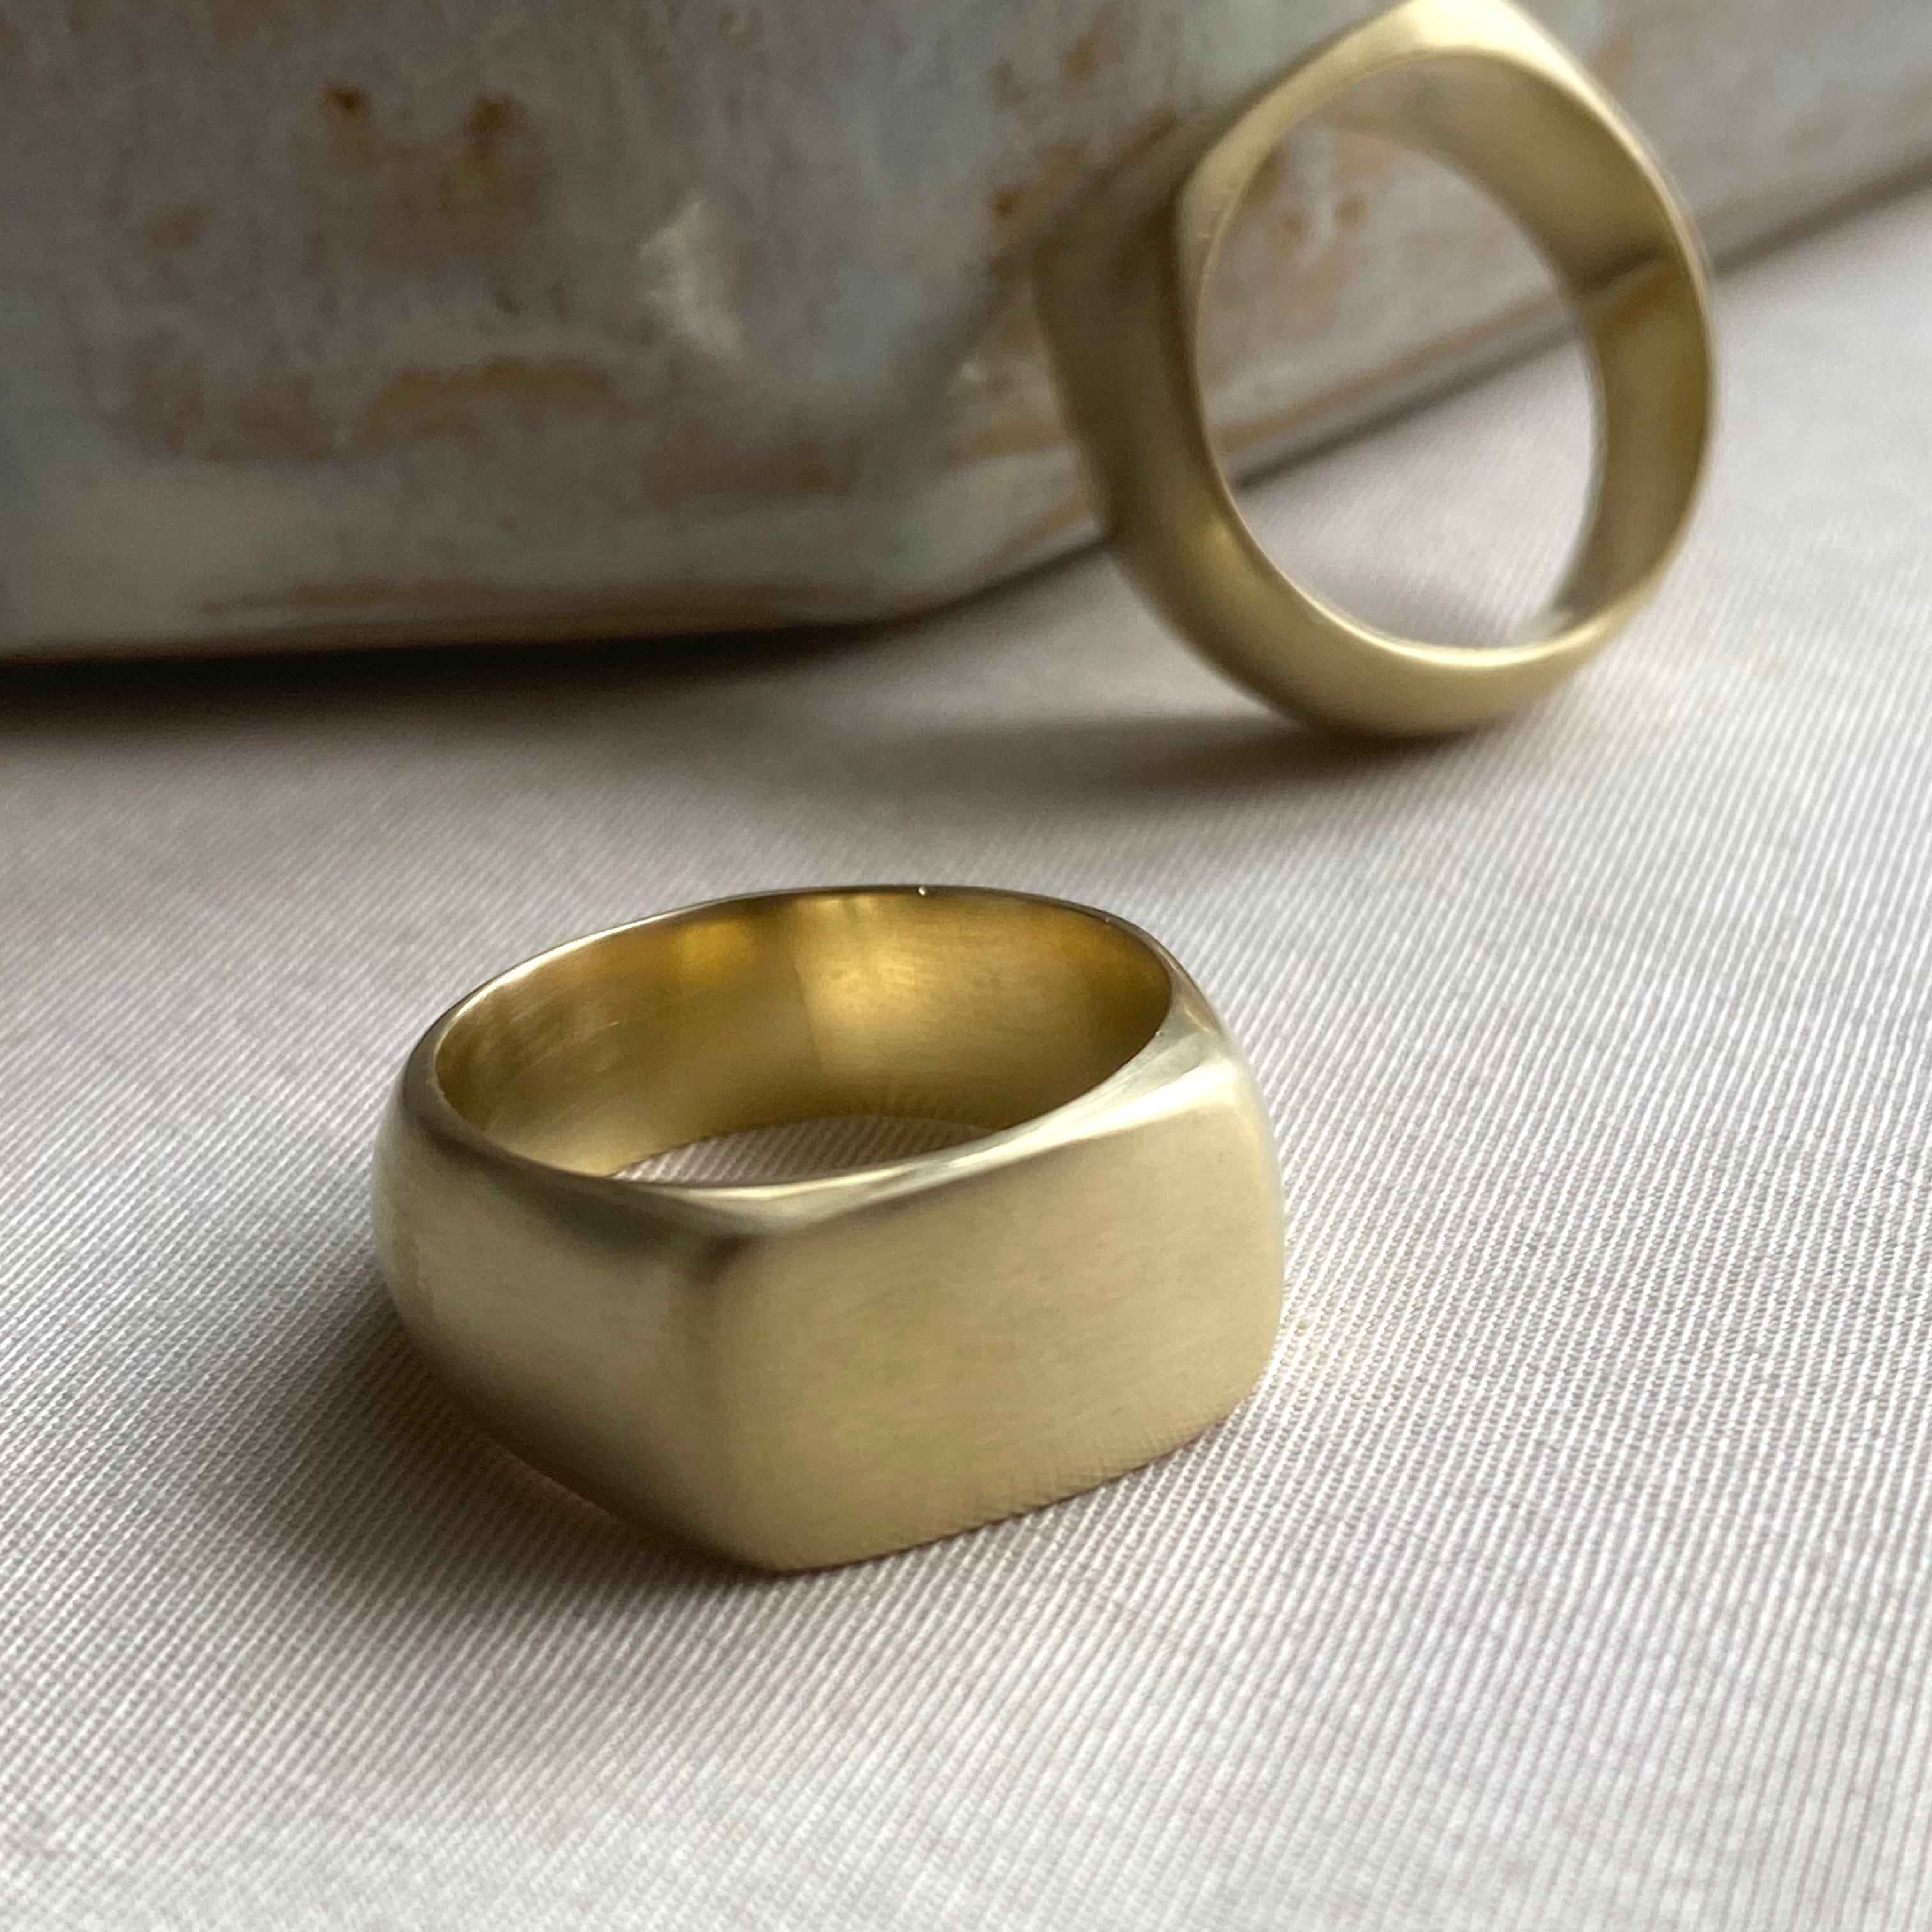 stamp ring （真鍮指輪/ゴールド/シンプル/号数指定可能/フリーサイズ/オーダーメイド） coyakame